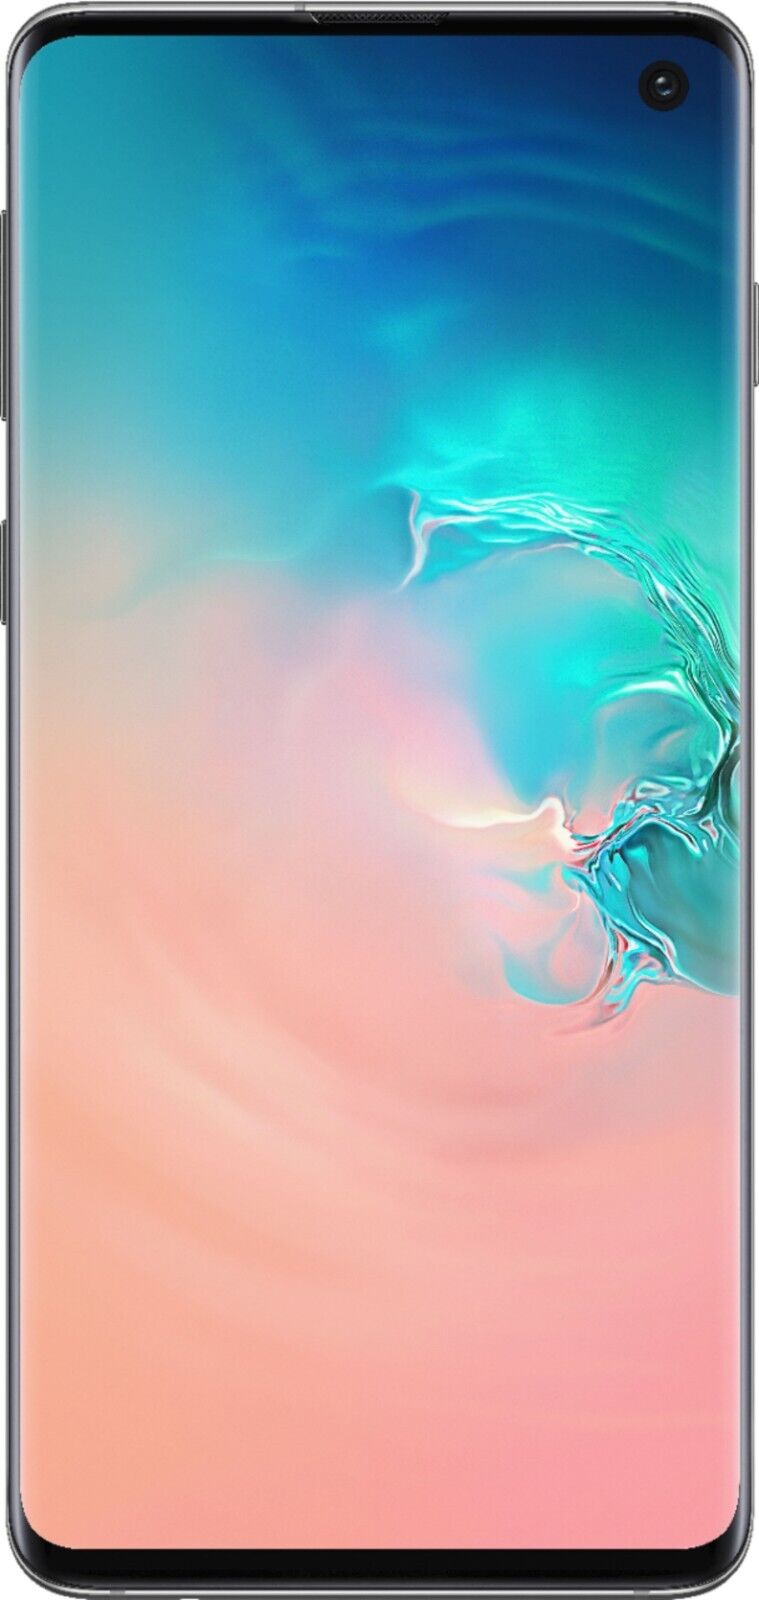 Galaxy S10 512GB - Prism White - Locked AT&T